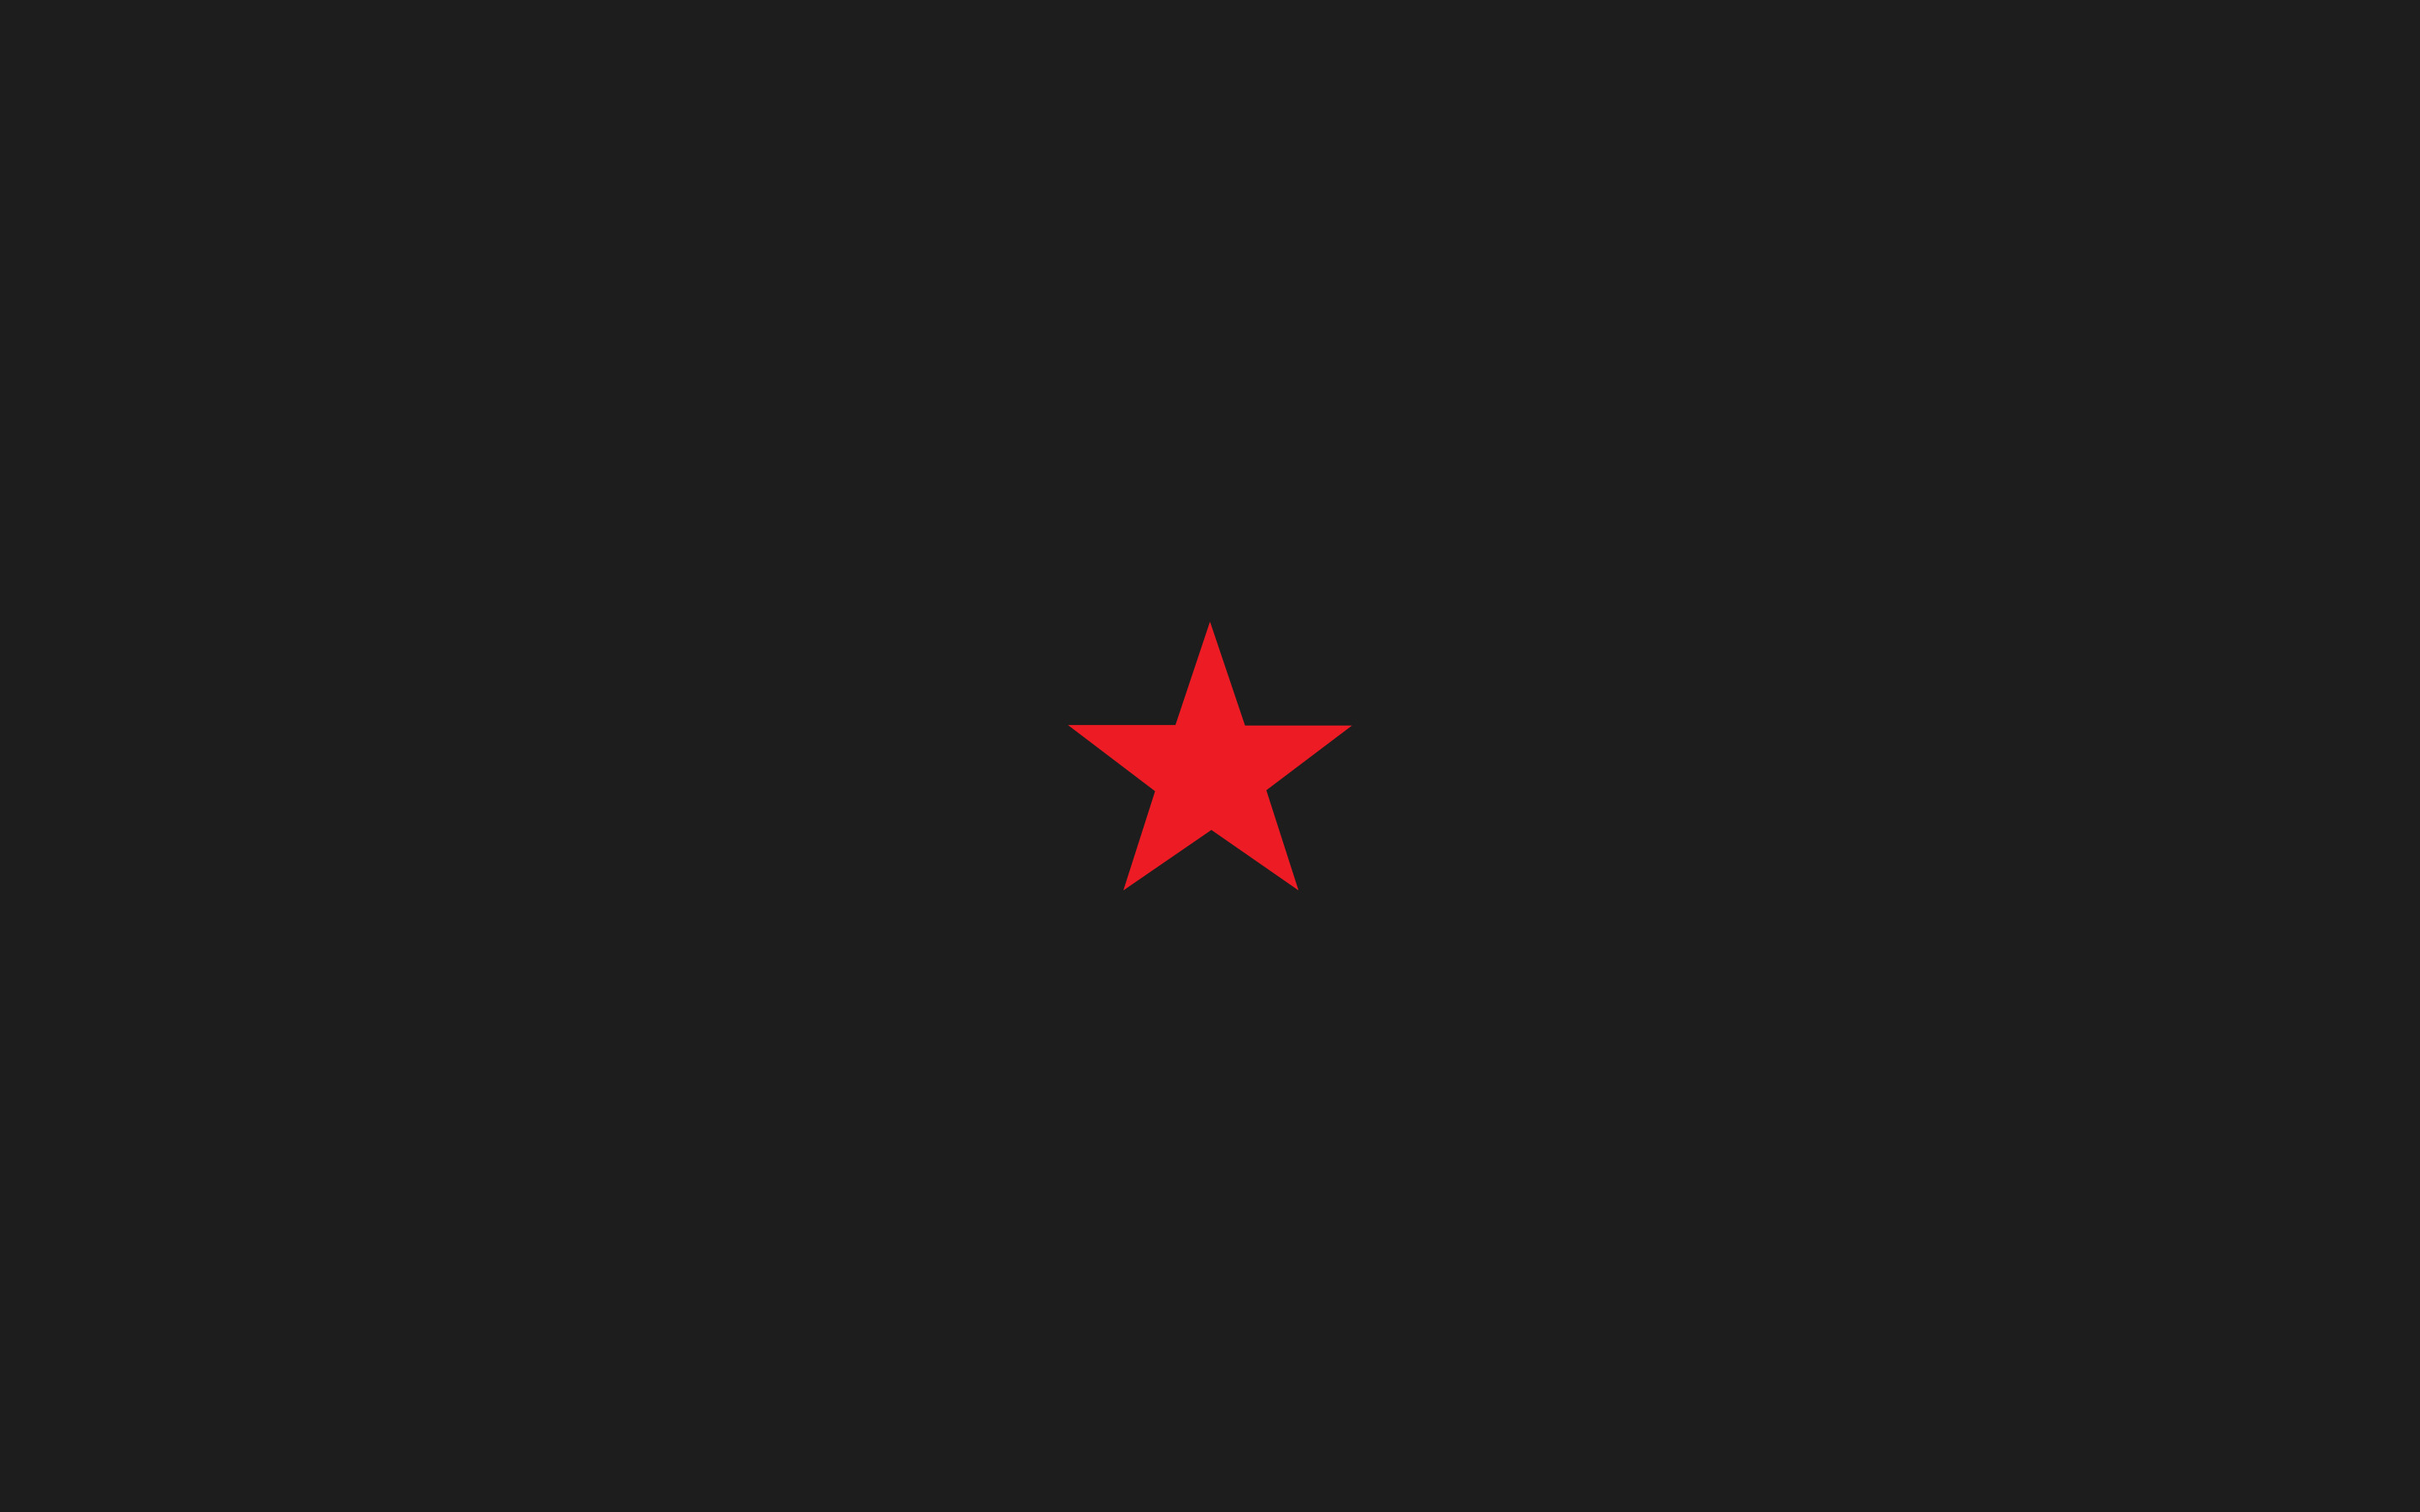 digital Art, Minimalism, Stars, Simple, Simple Background, Red Star, Red, Black Background Wallpaper